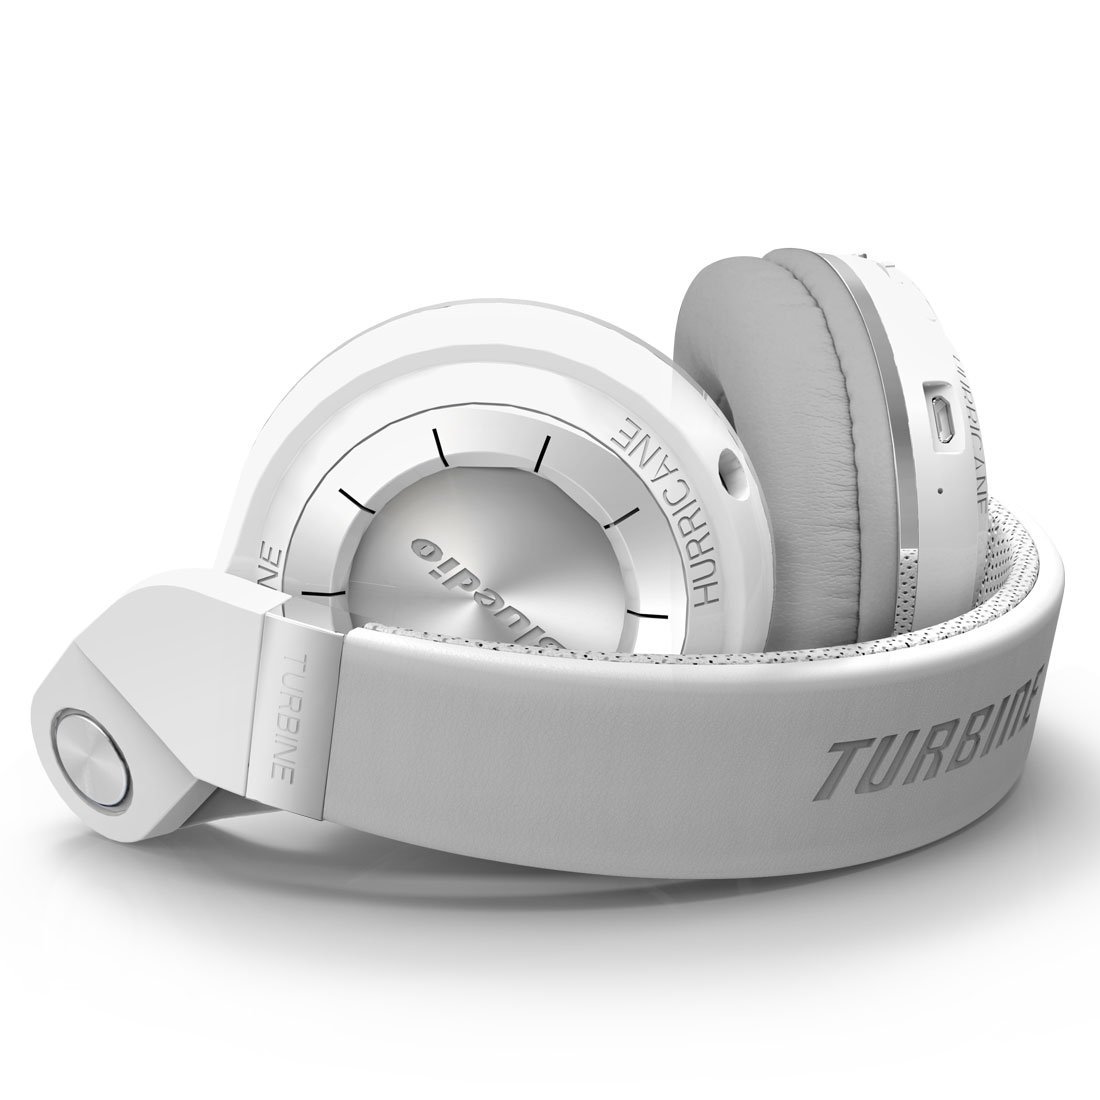 Bluedio T2 bluetooth v4.1 headset, vit